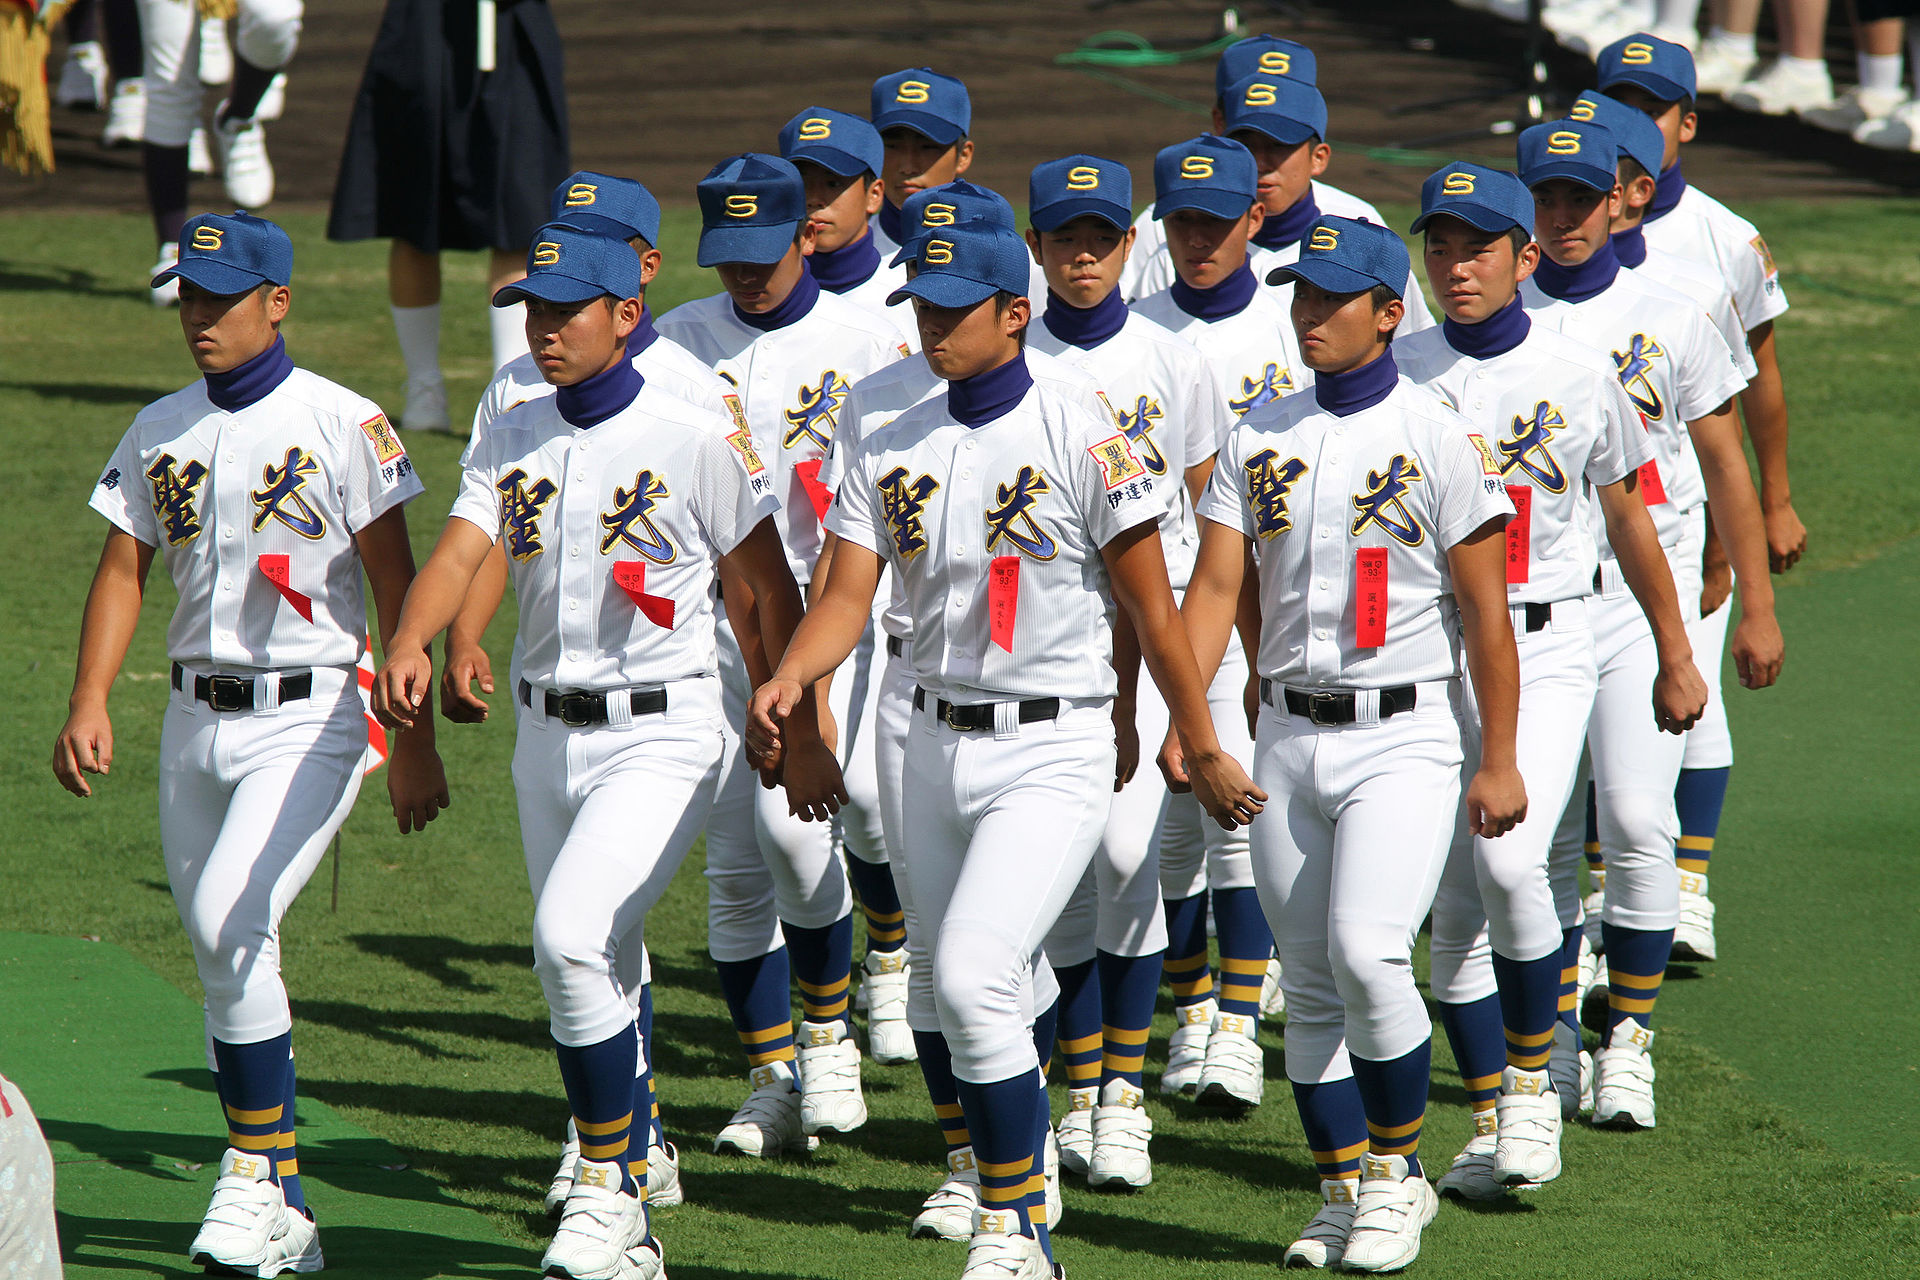 high school baseball uniforms